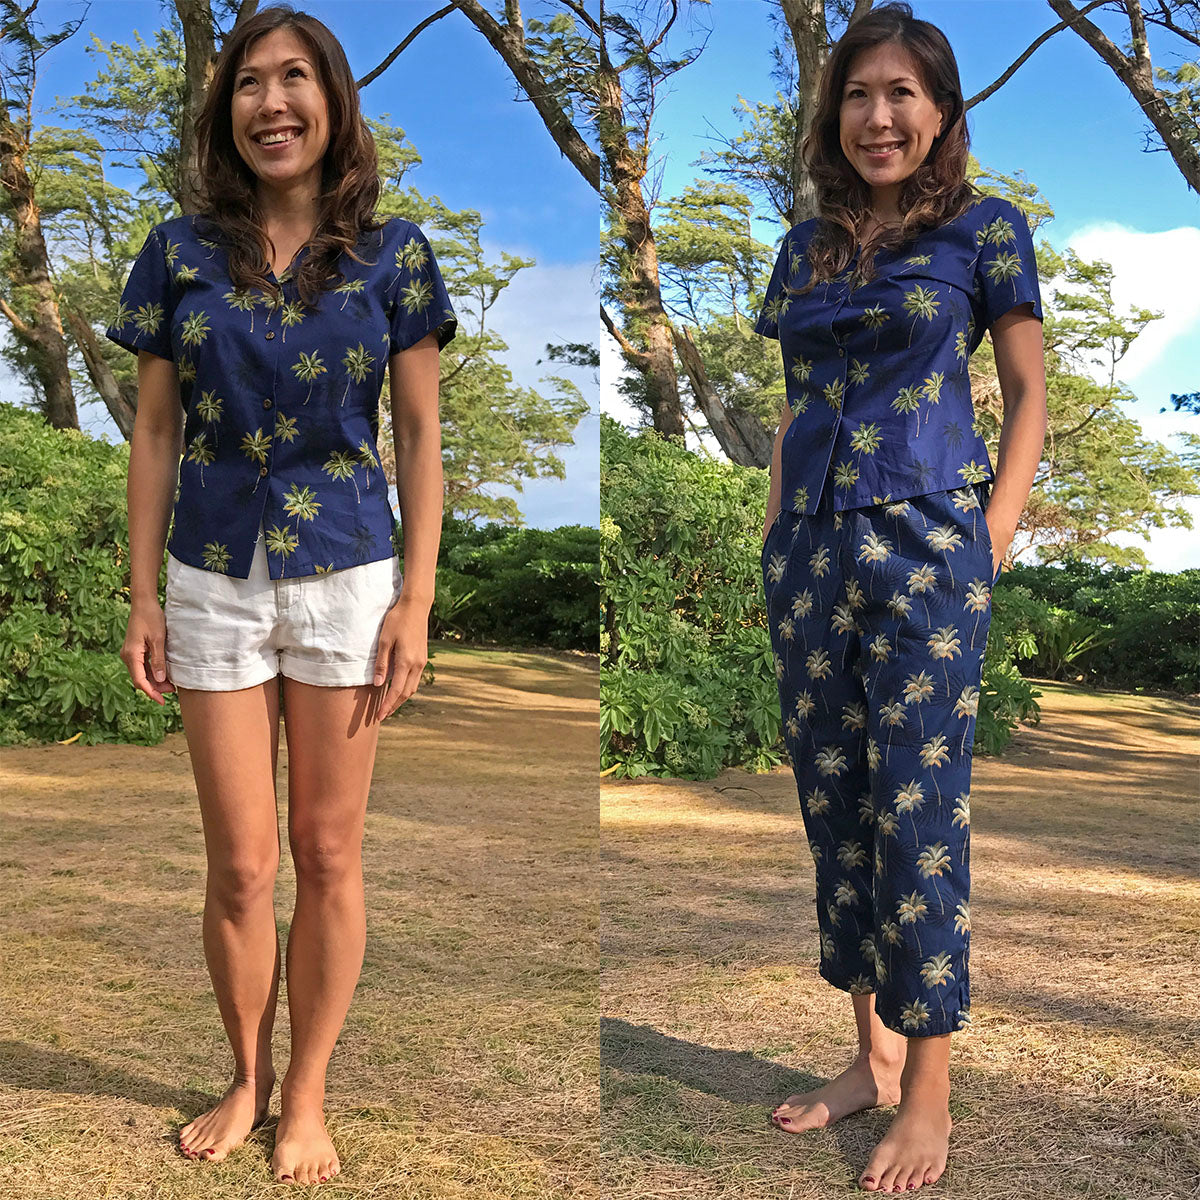 Wearing Printed Bottoms – AlohaFunWear.com